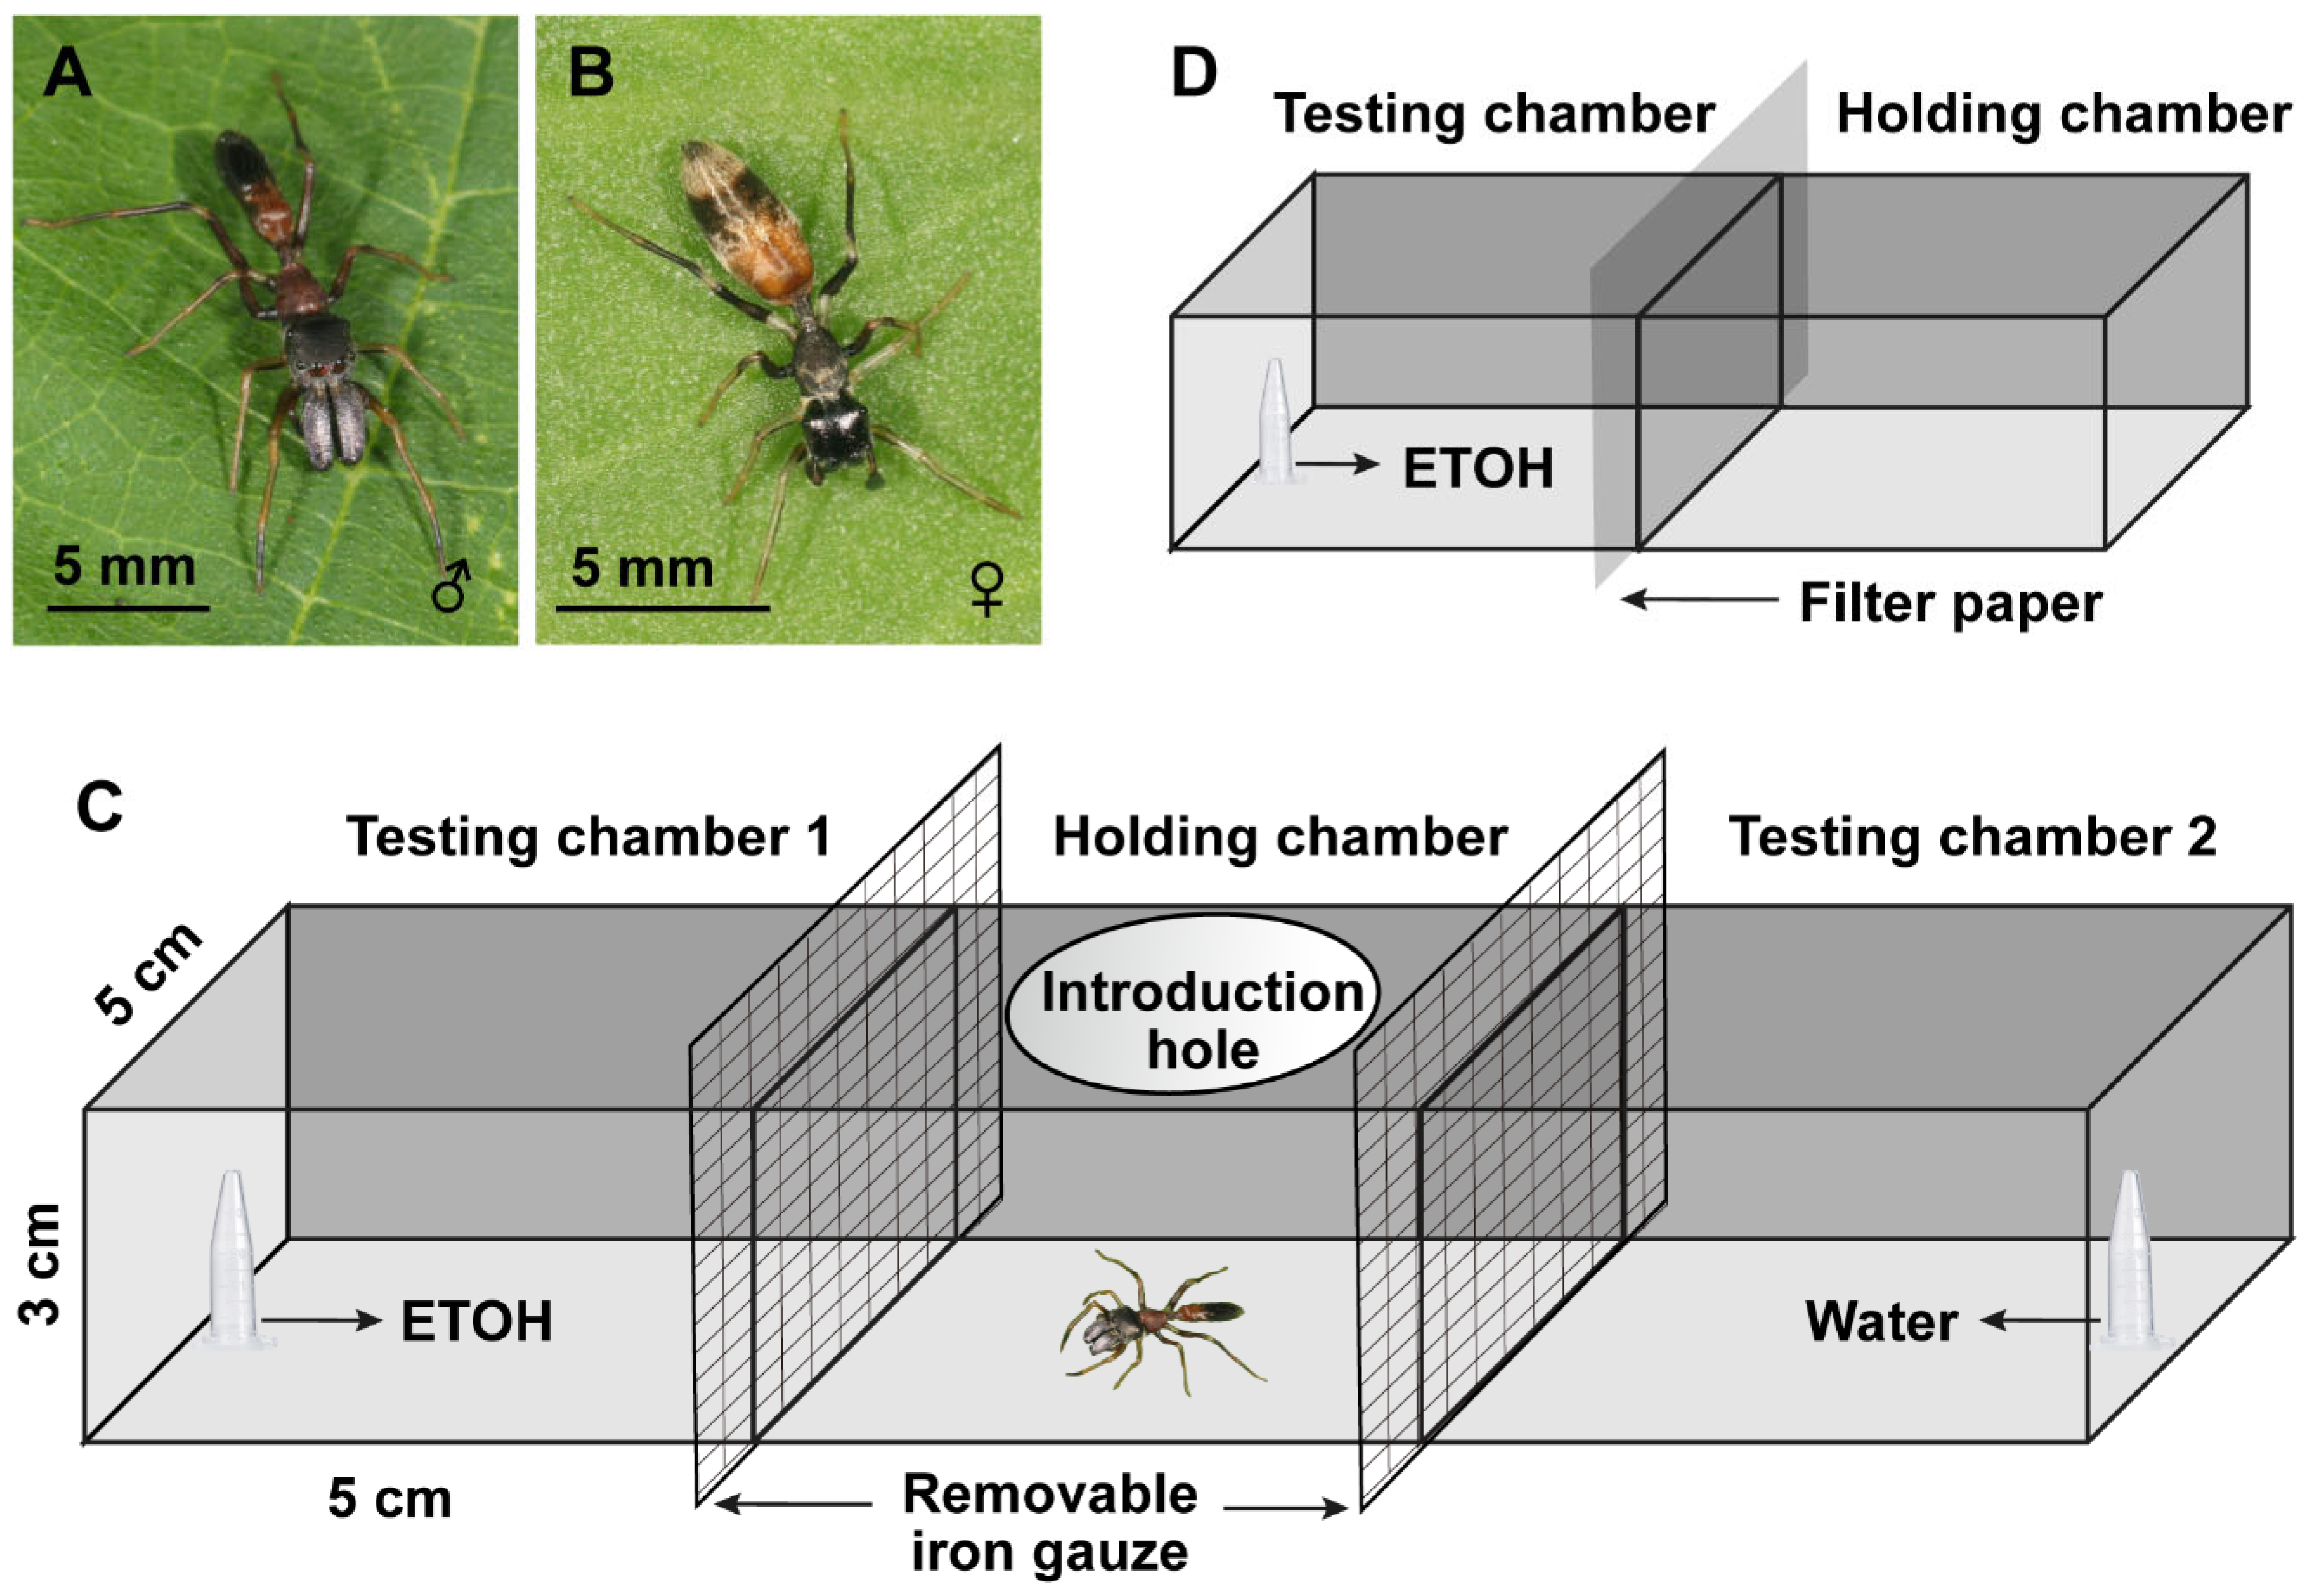 Jumping spider - Plant & Pest Diagnostics